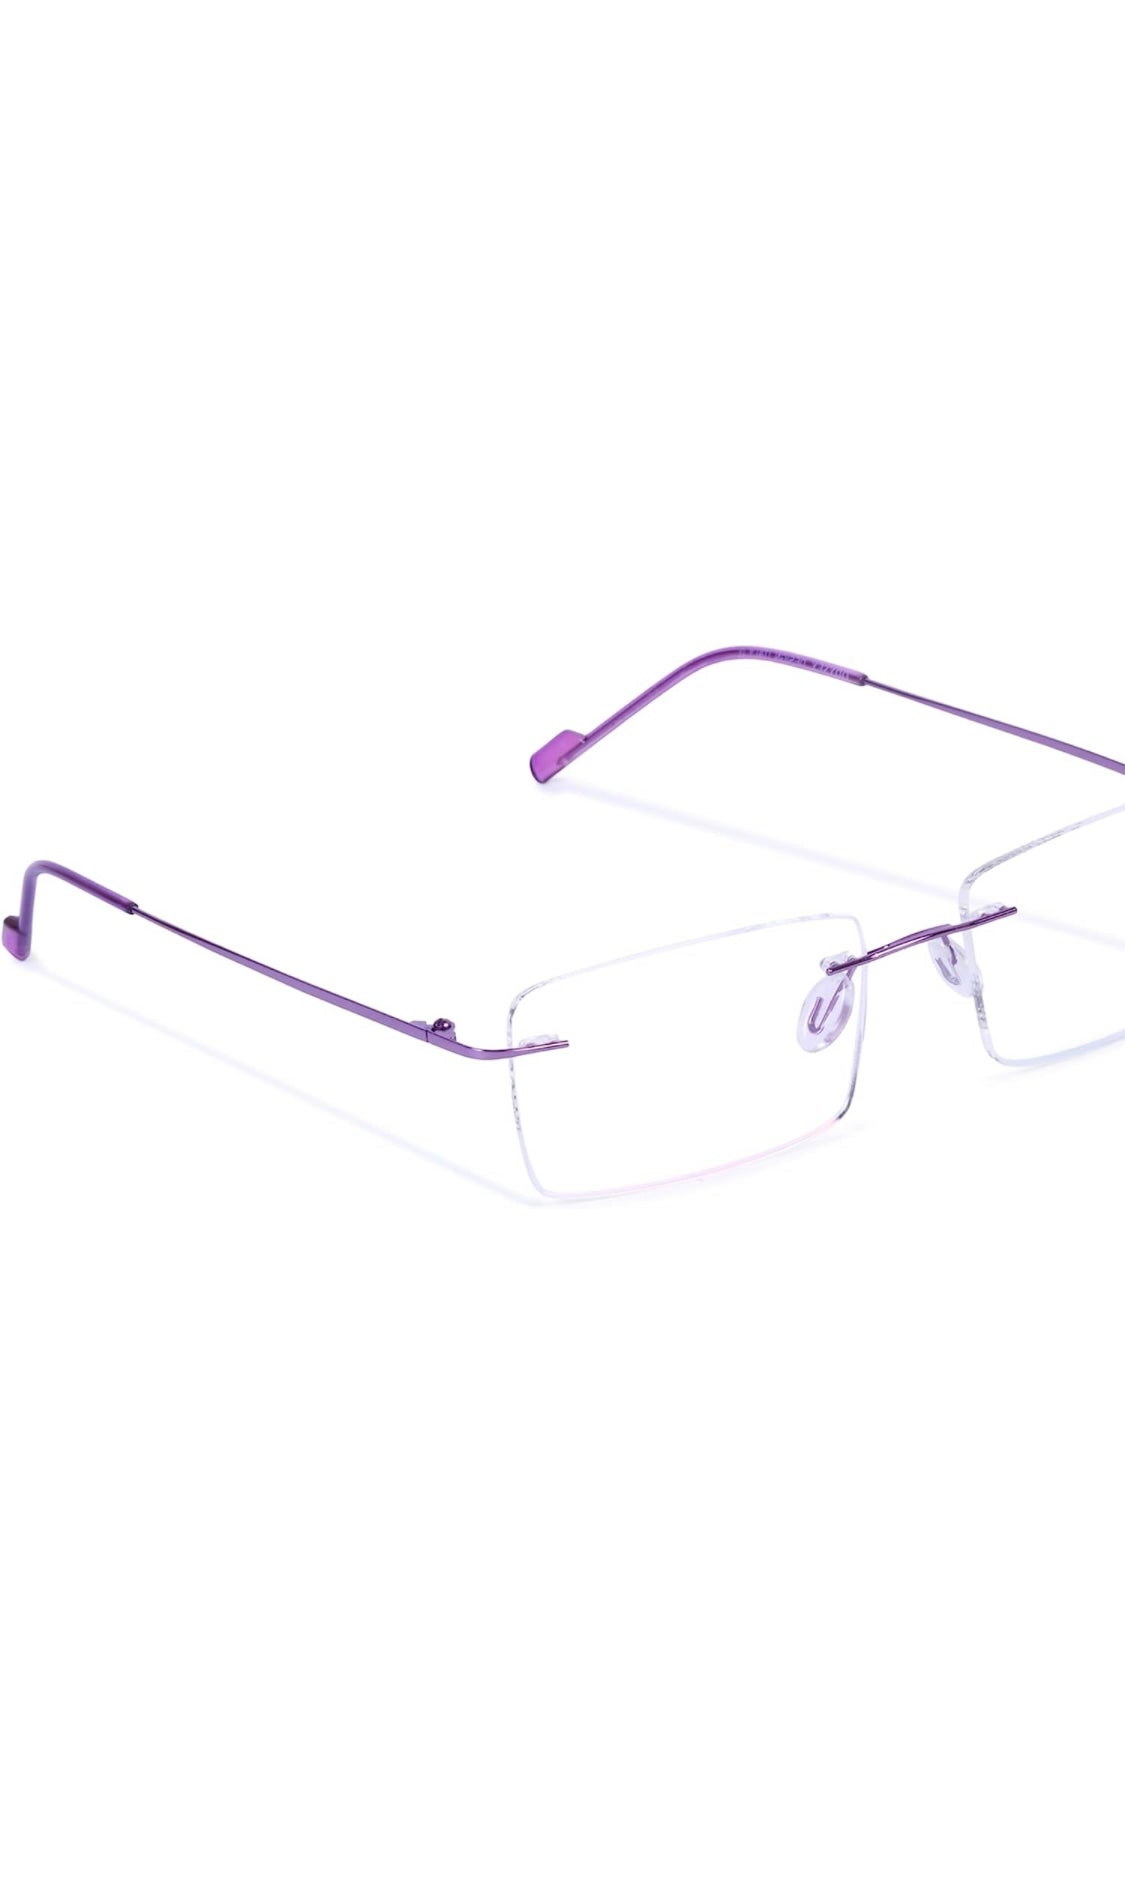 Jodykoes® Premium Rimless Anti Glare Rectangle Frame Spectacle Eyeglasses Eyewear (Purple) - Jodykoes ®